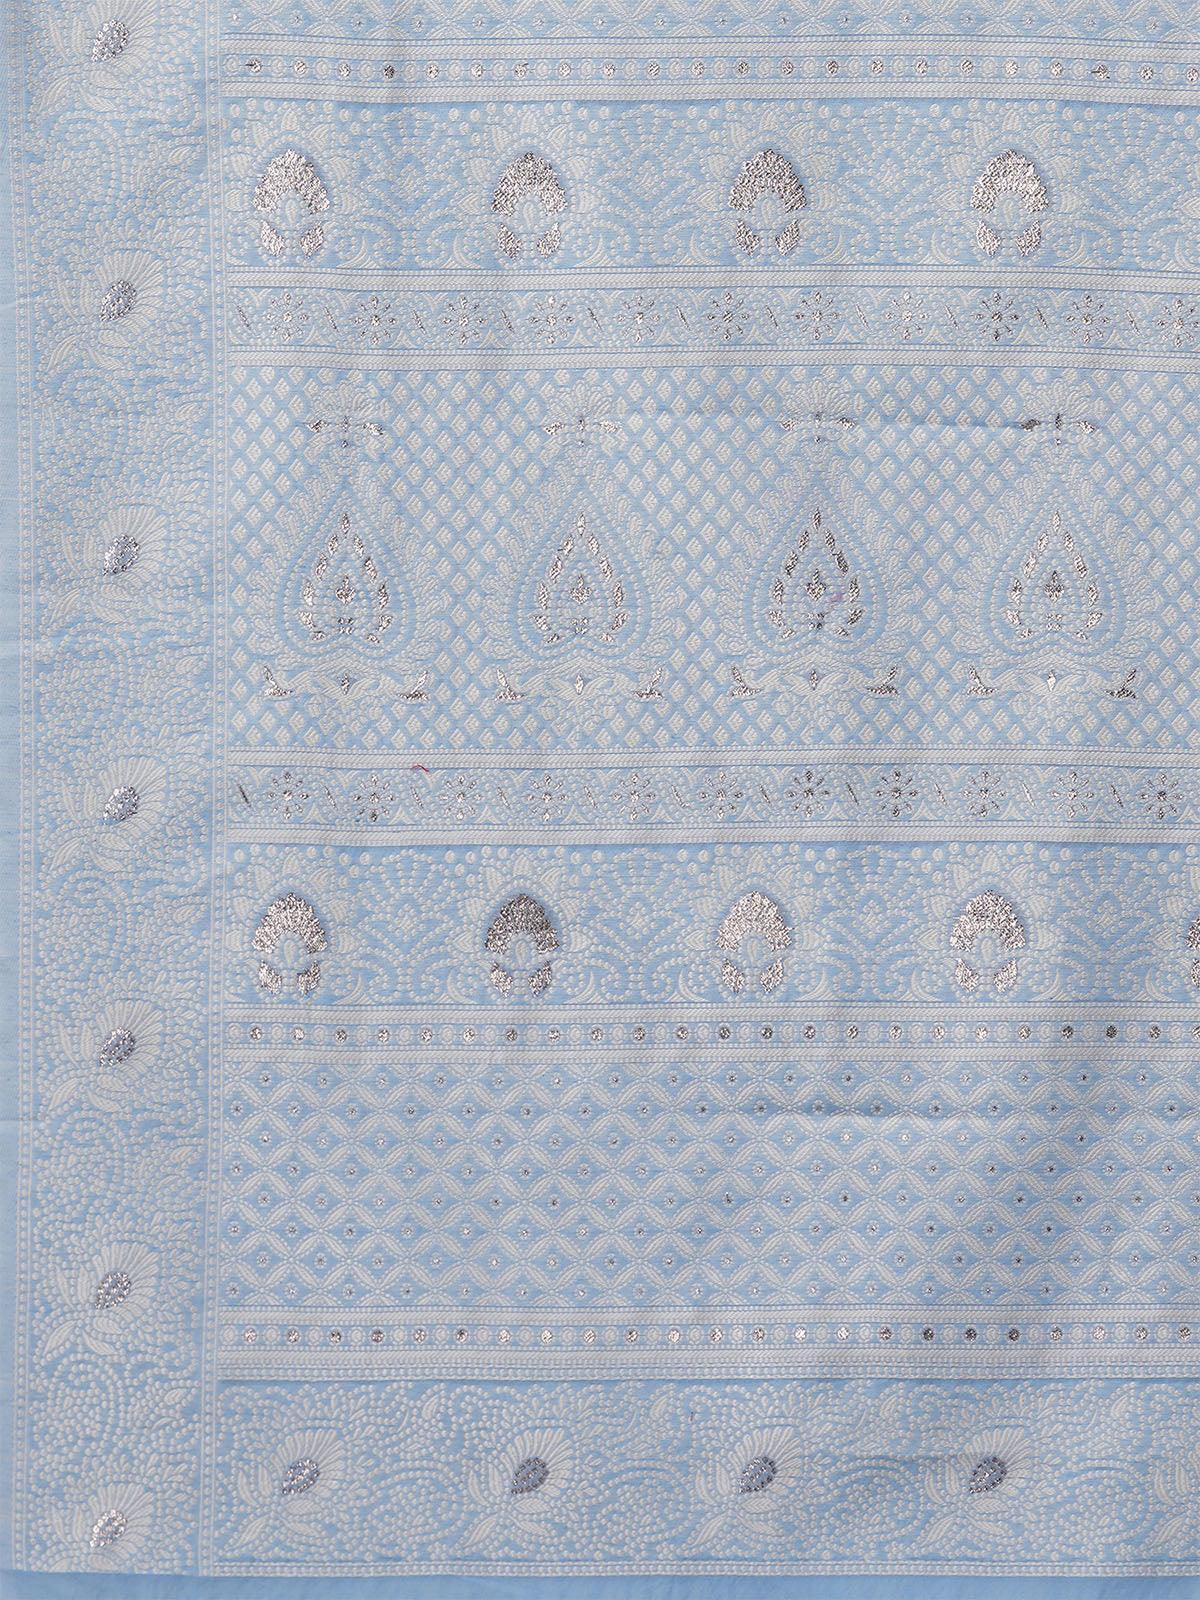 Women's Sky Blue Festive Silk Blend Woven Design Saree With Unstitched Blouse - Odette